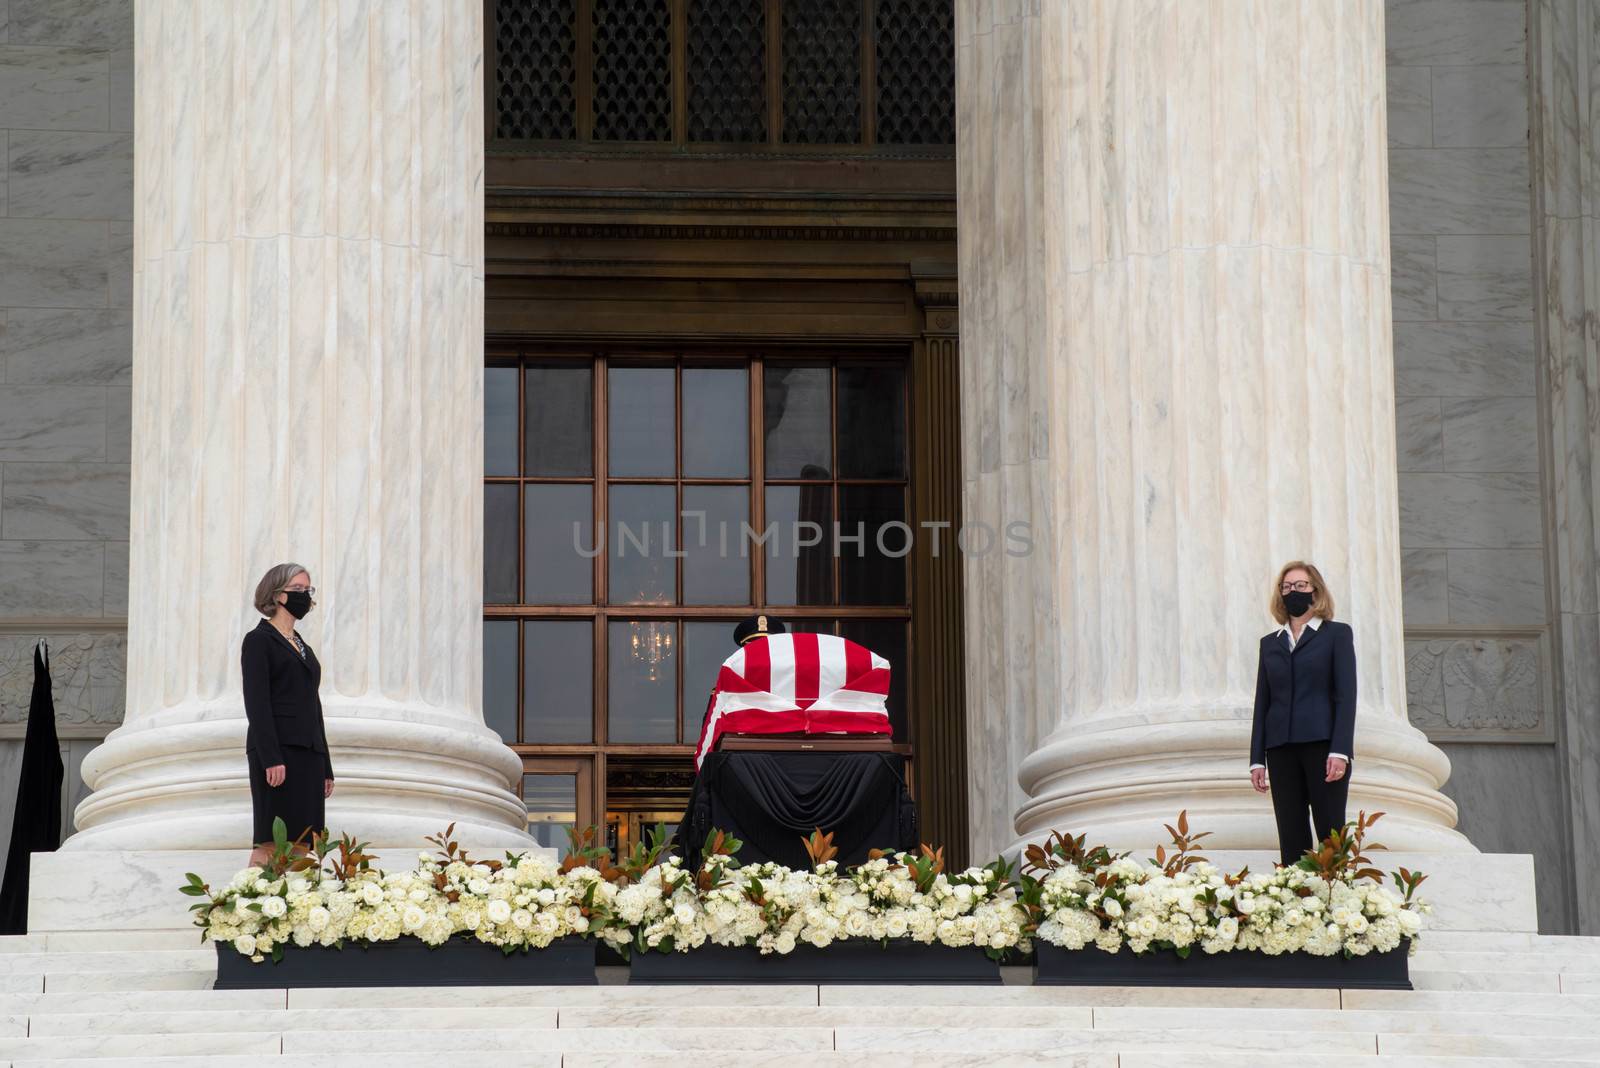 Justice Ruth Bader Ginsburg's casket Supreme Court Building. by marysalen